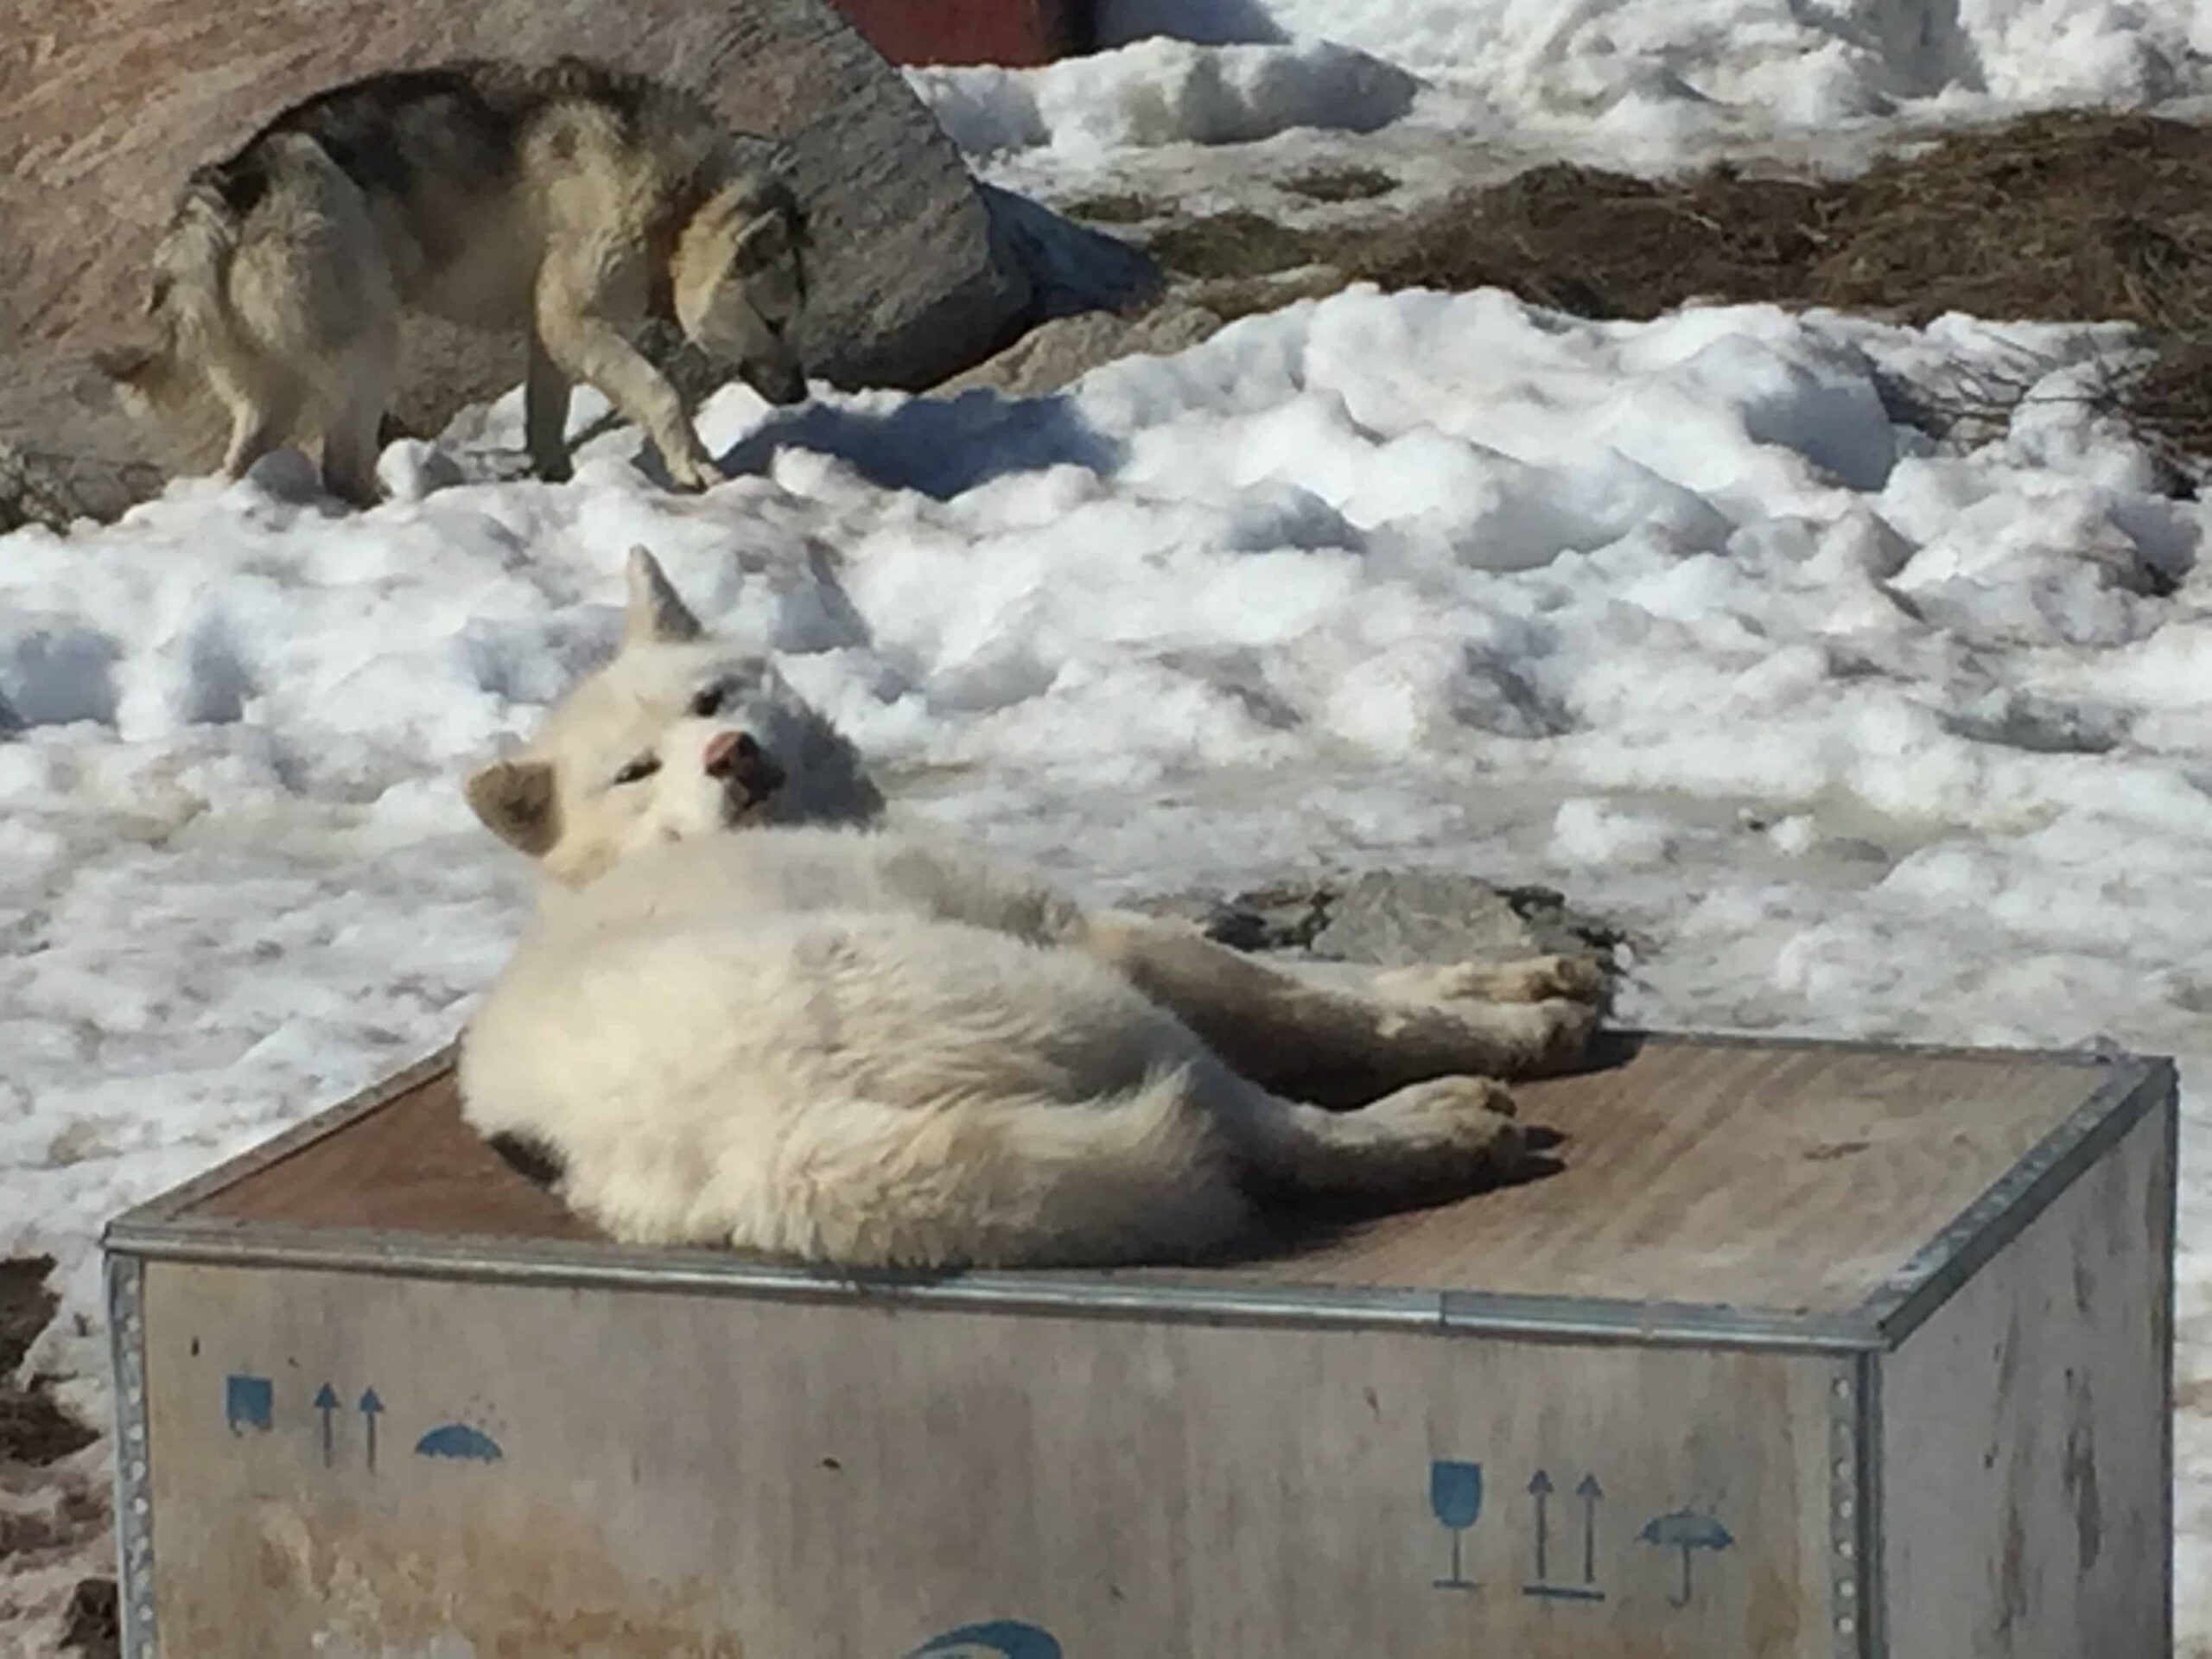 A huskie dog lies down on a wooden box